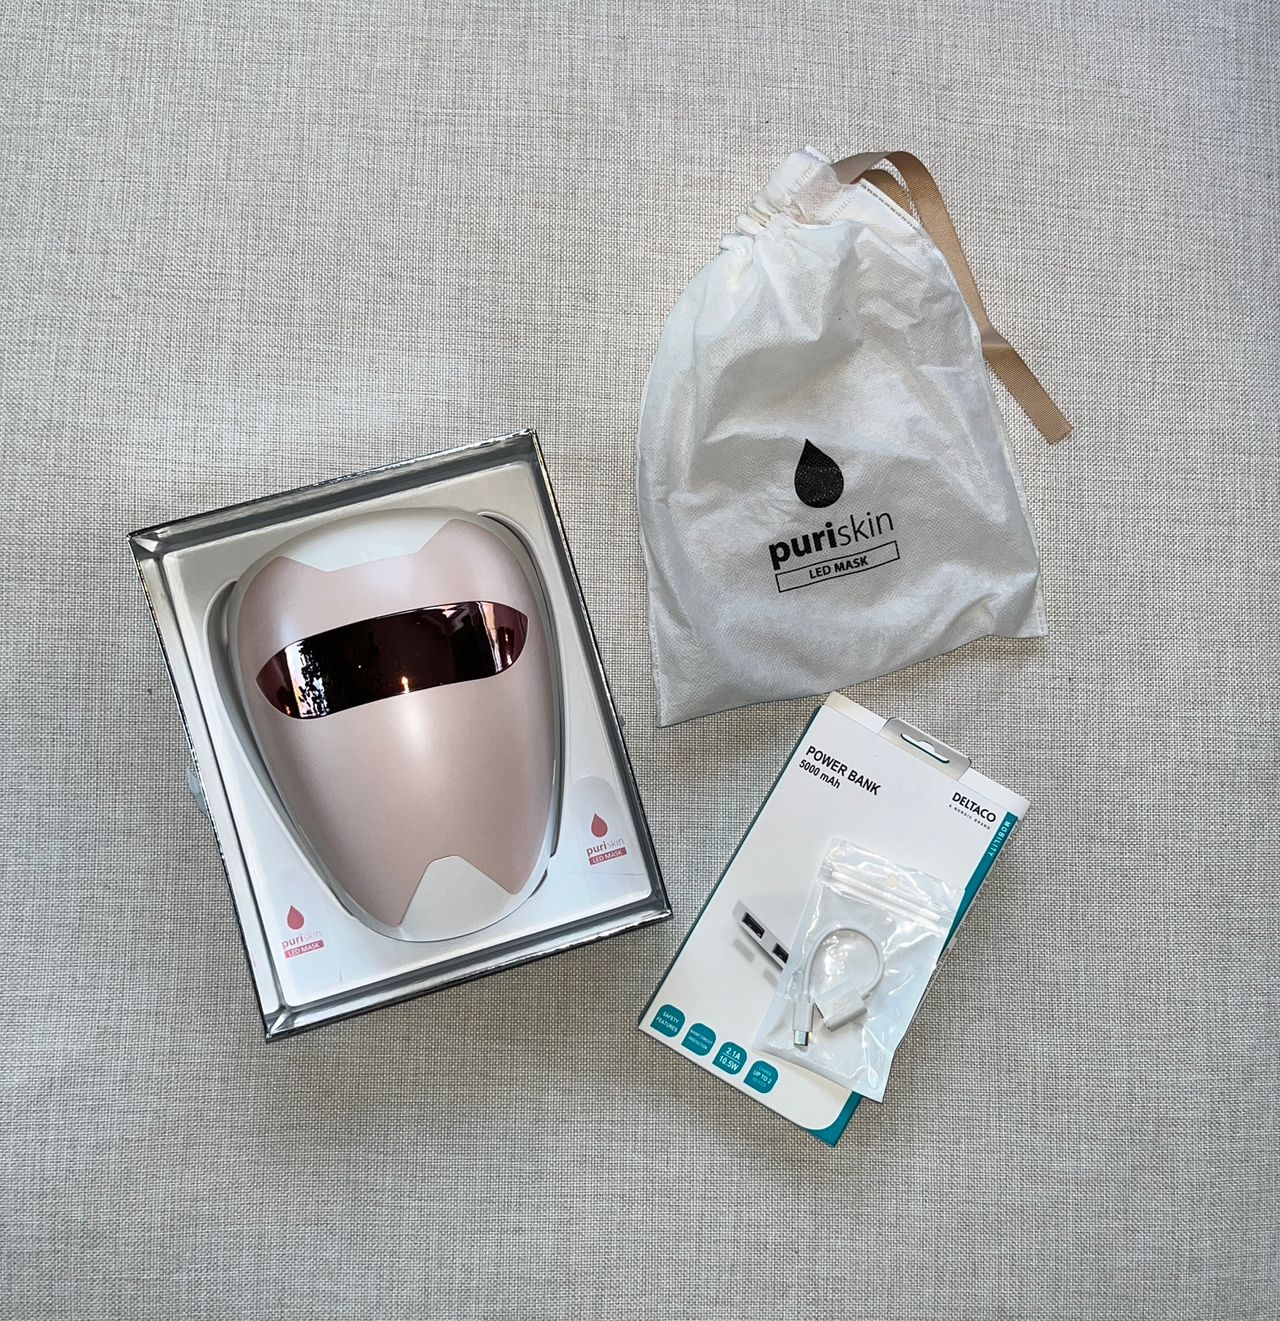 Puriskin LED maske | FINN torget